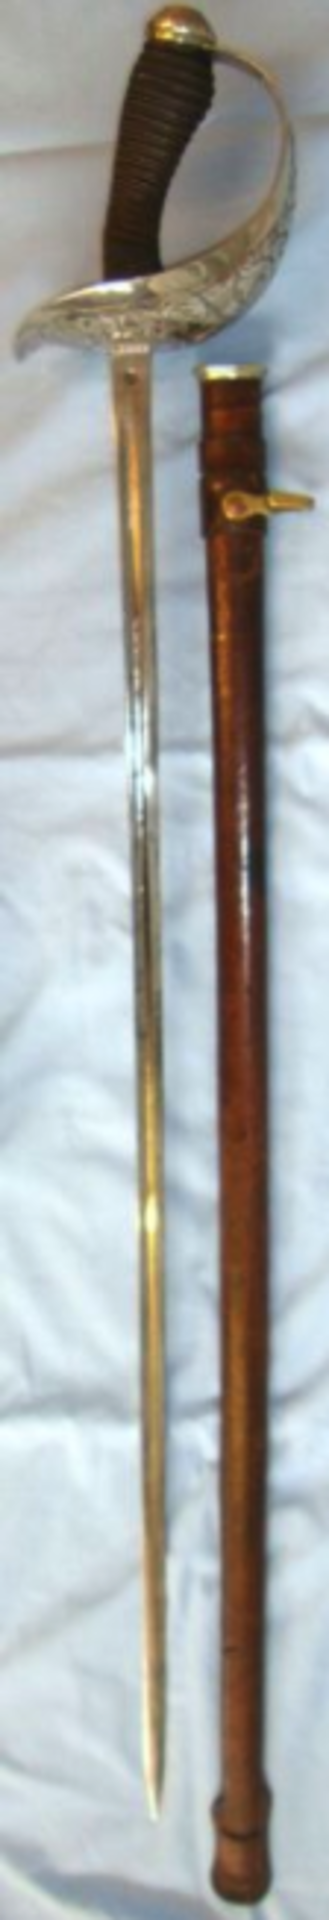 1912 Pattern British Officer's Cavalry Sword By Wilkinson Sword Blade No. 53639 & Scabbard.   ED